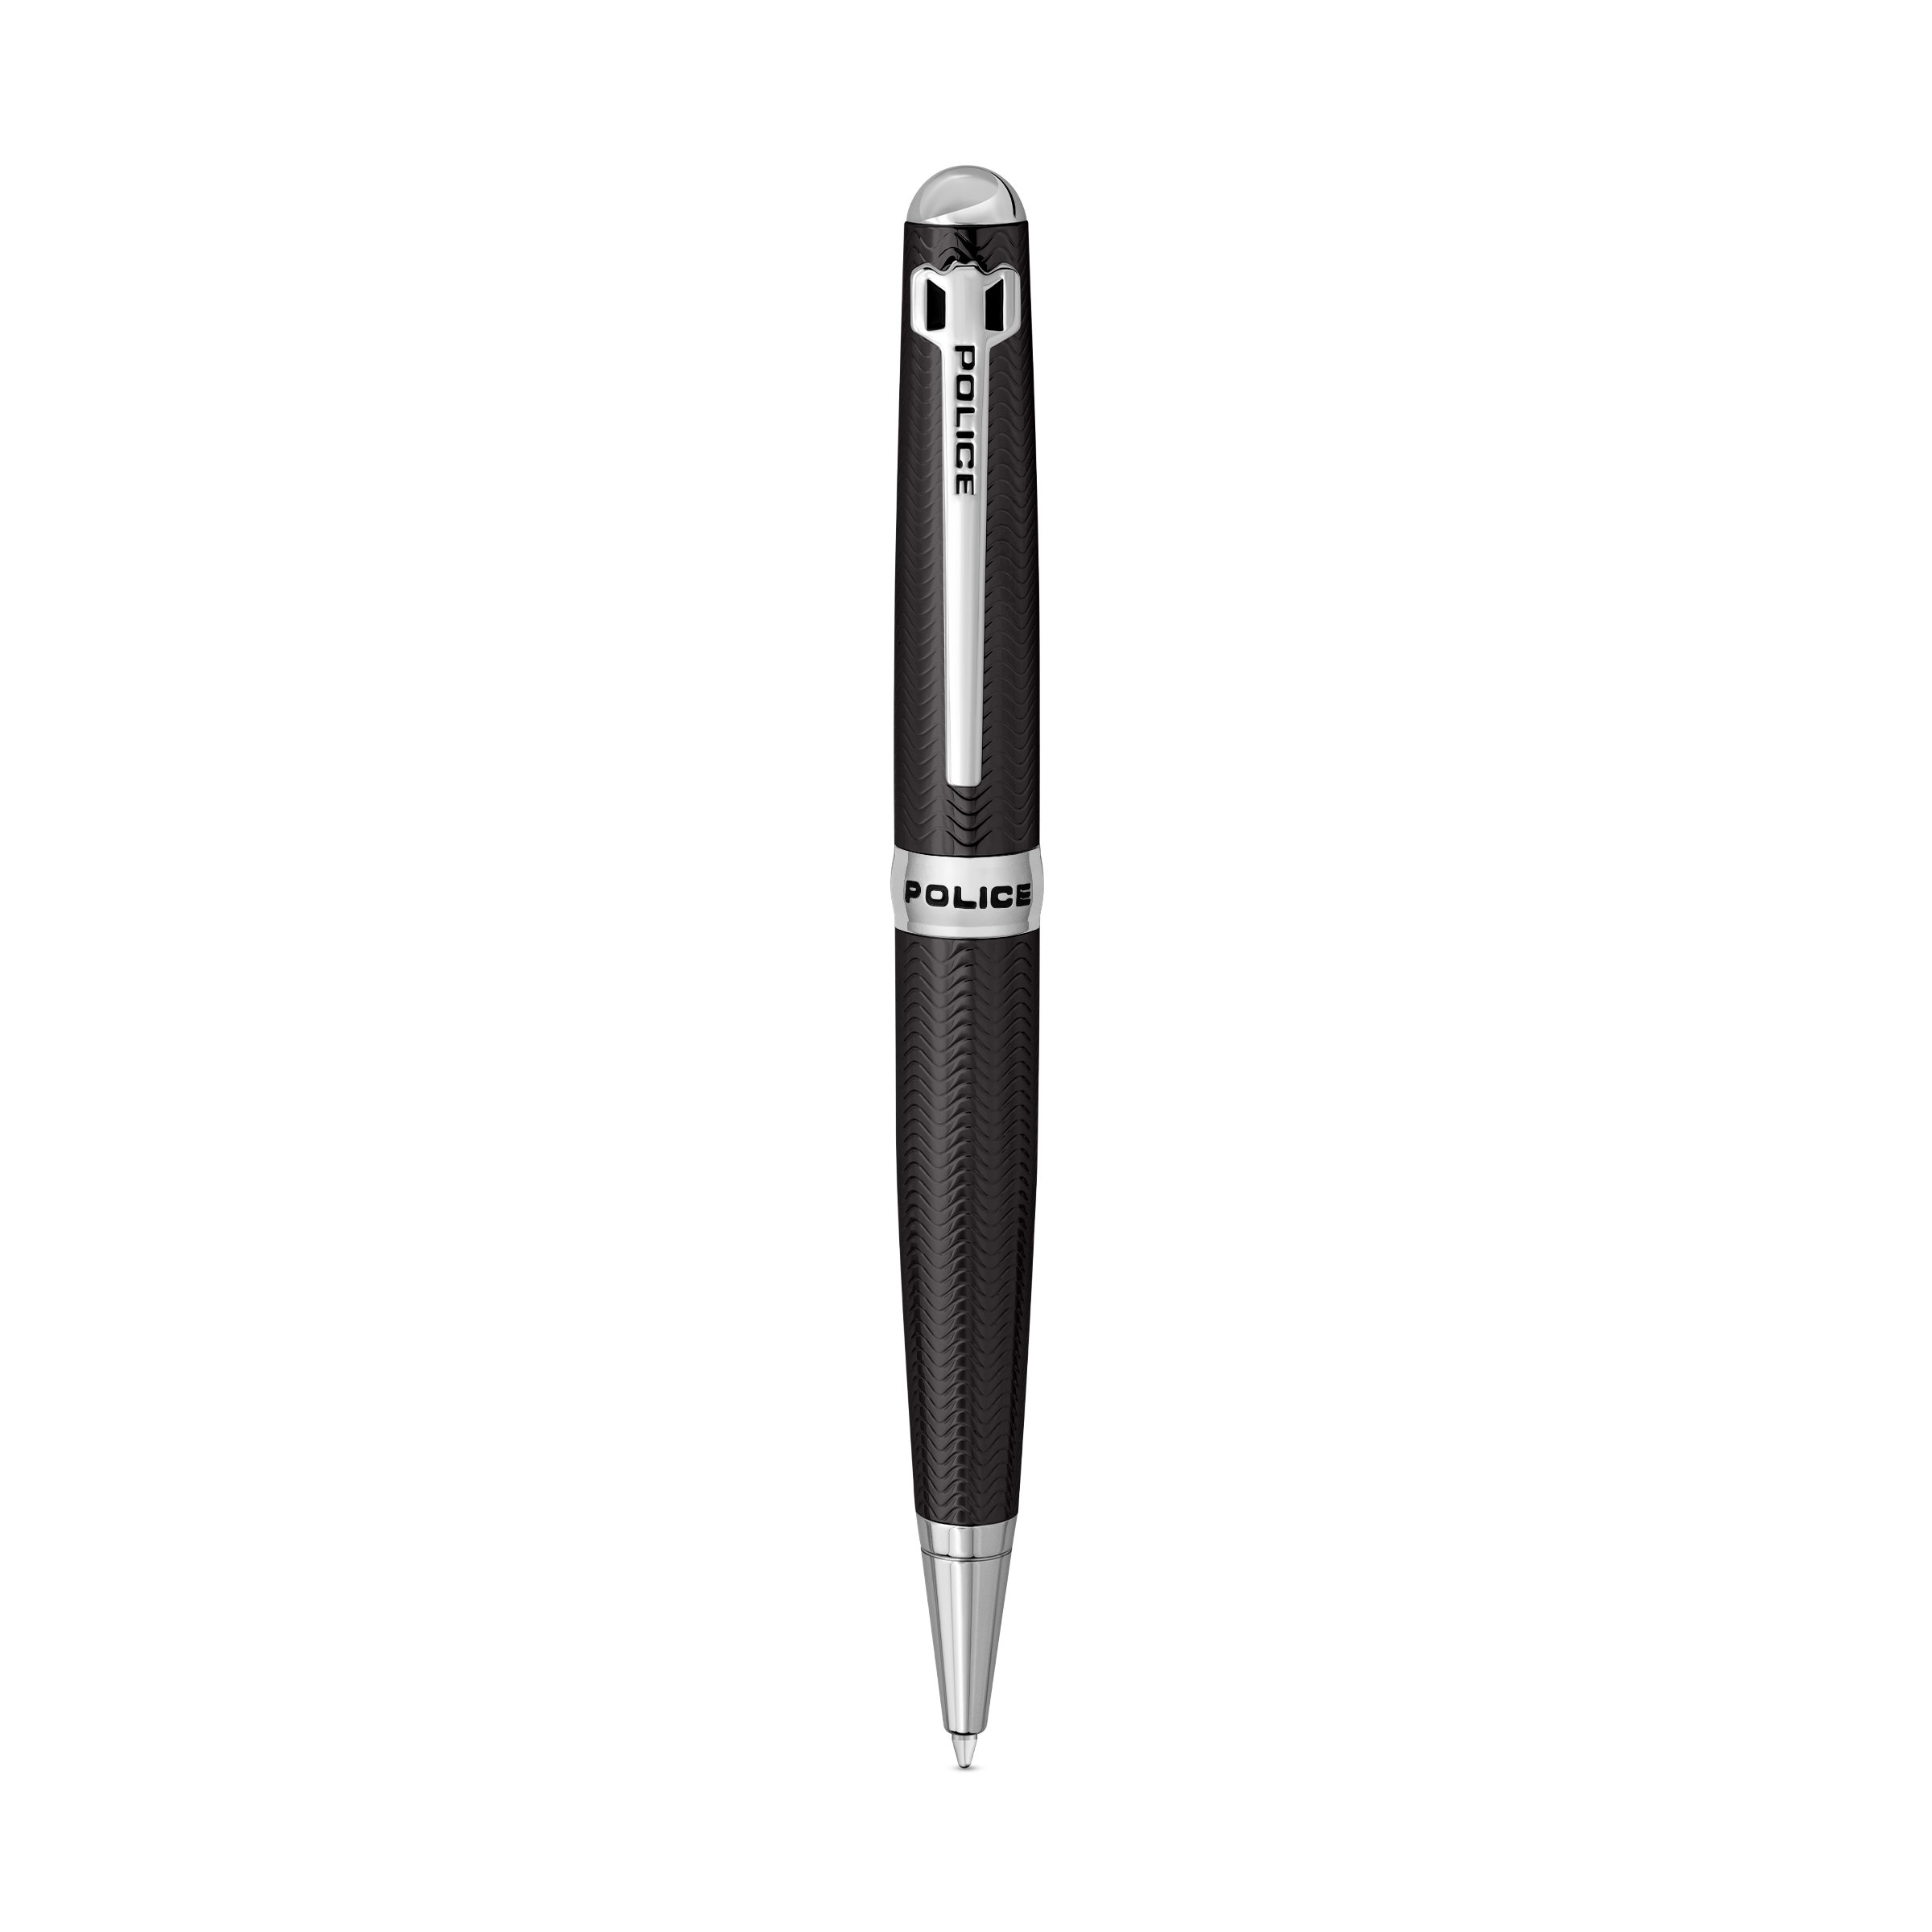 POLICE - Ball Point Pen For Men Black & Silver Color - PERGR0002603